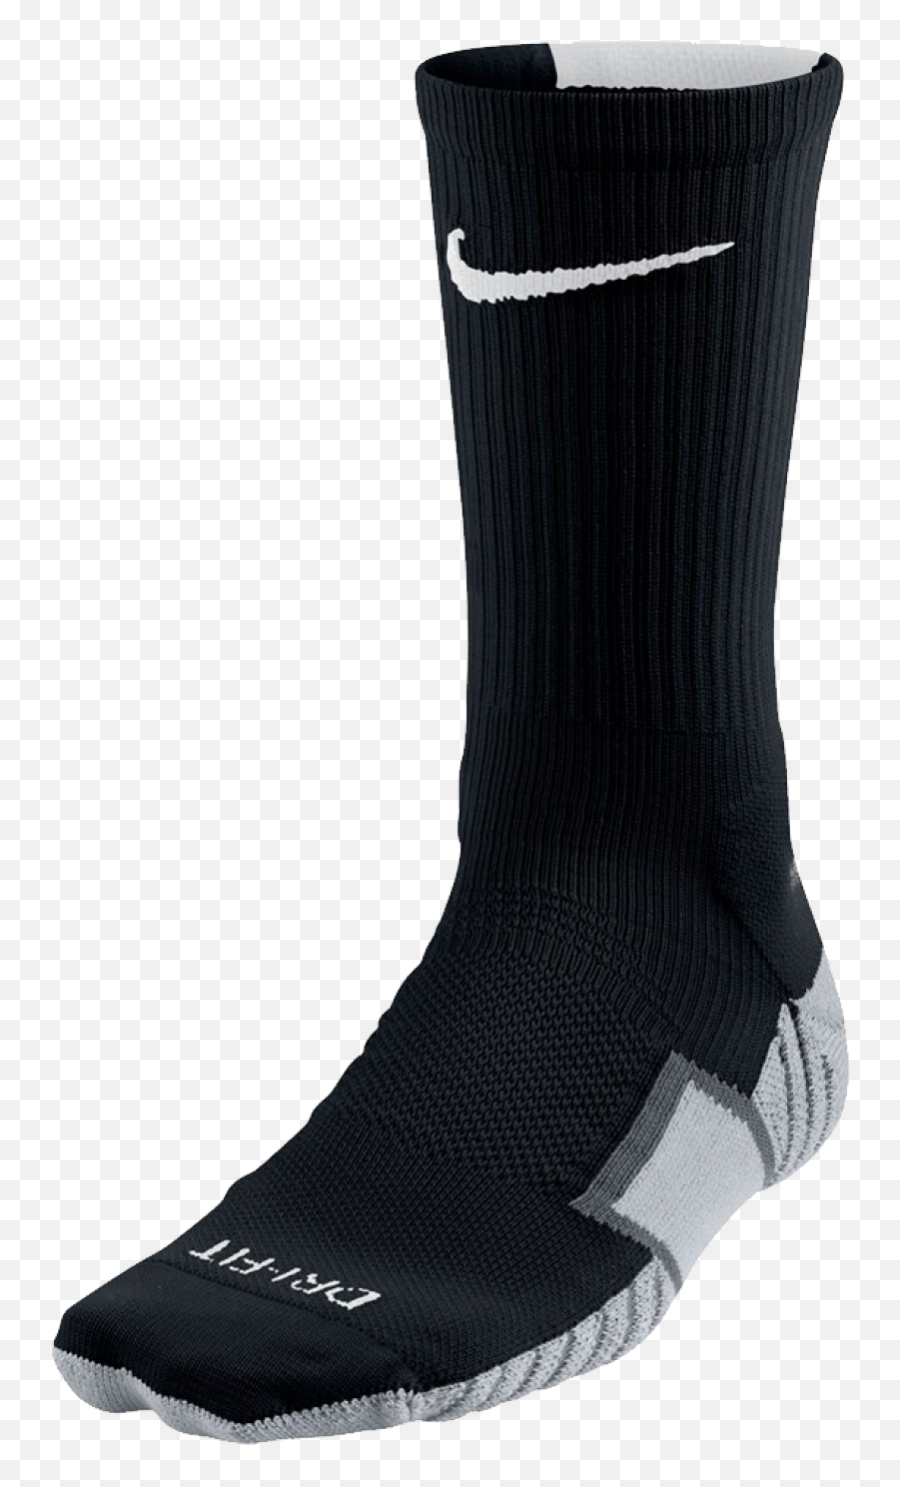 Drift Black Socks Png Image - Purepng Free Transparent Cc0,Drift Png